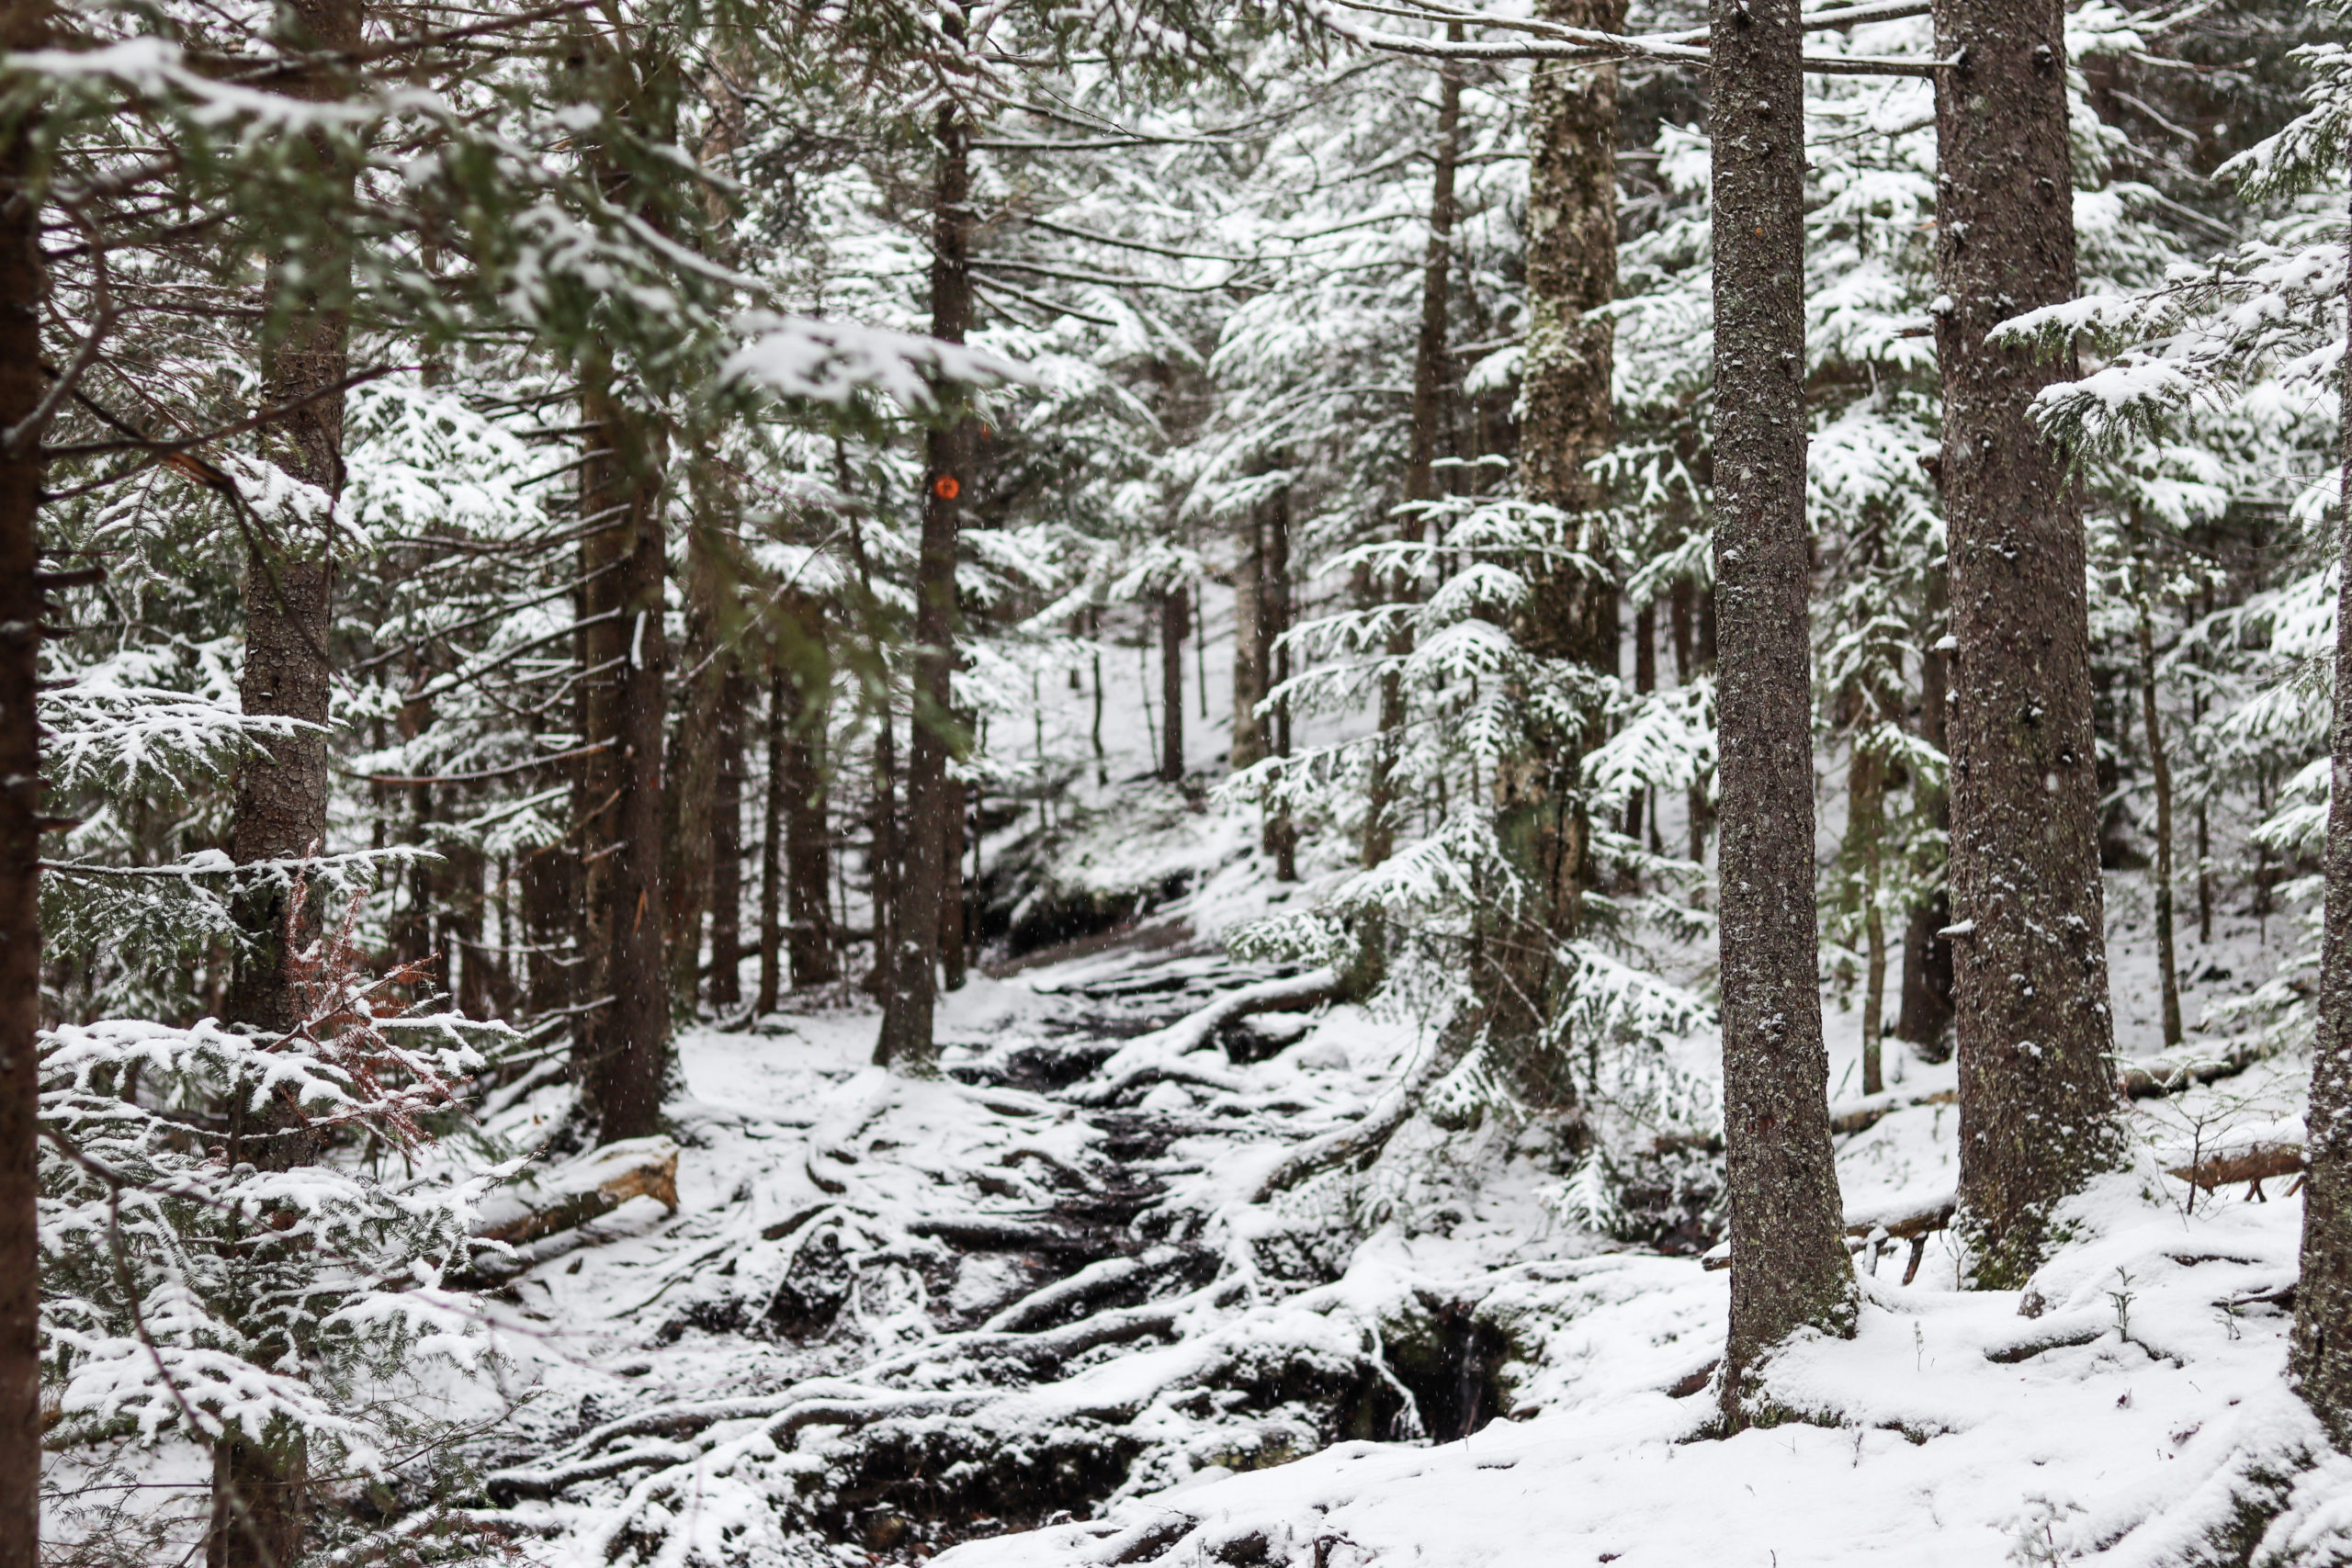 Views of snowy trees on Mount Jo hike